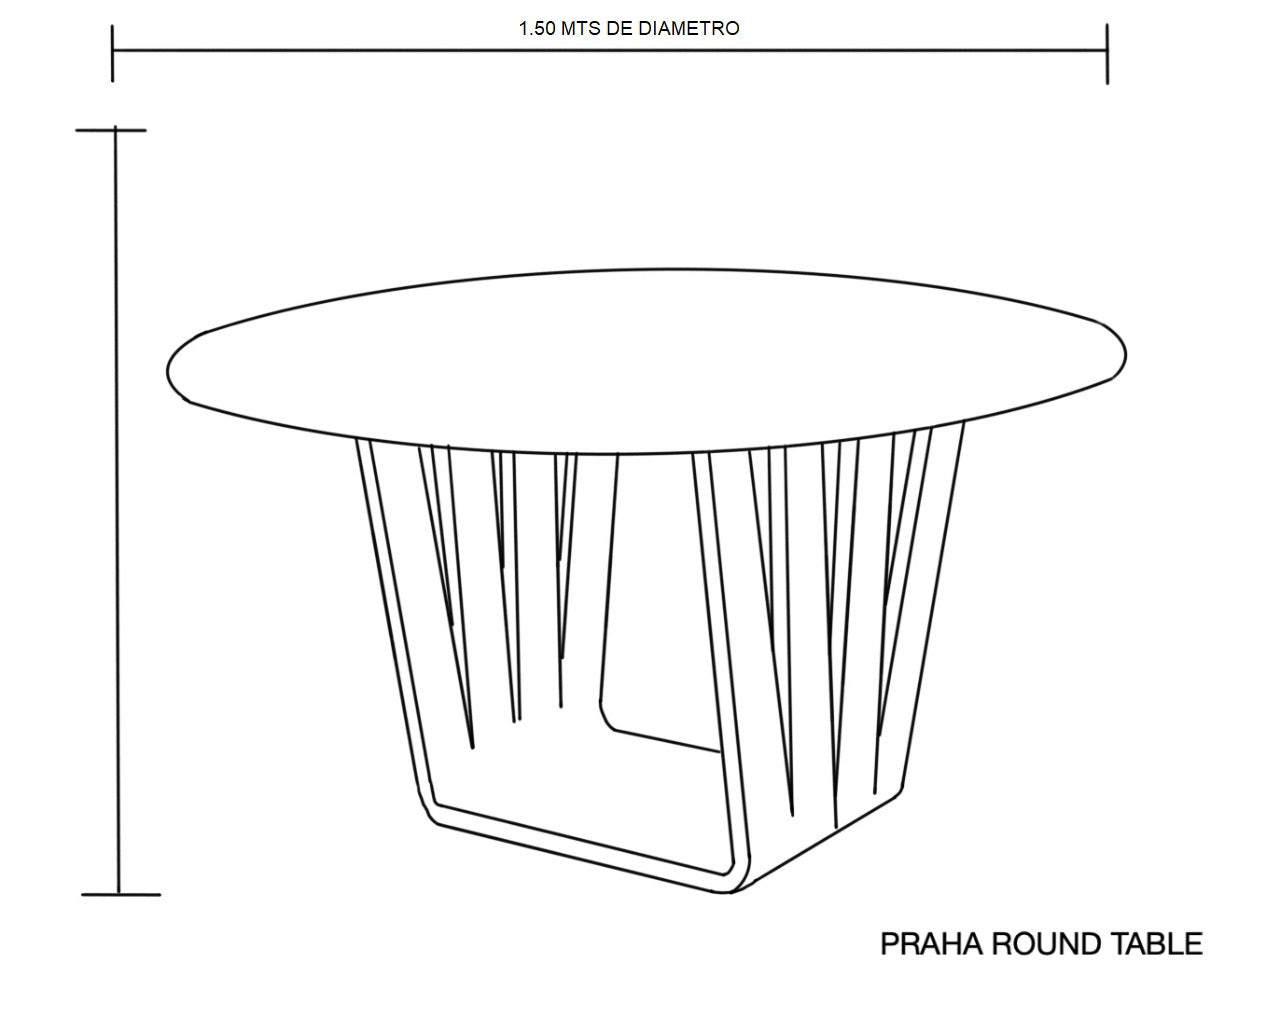 Praha Round Table